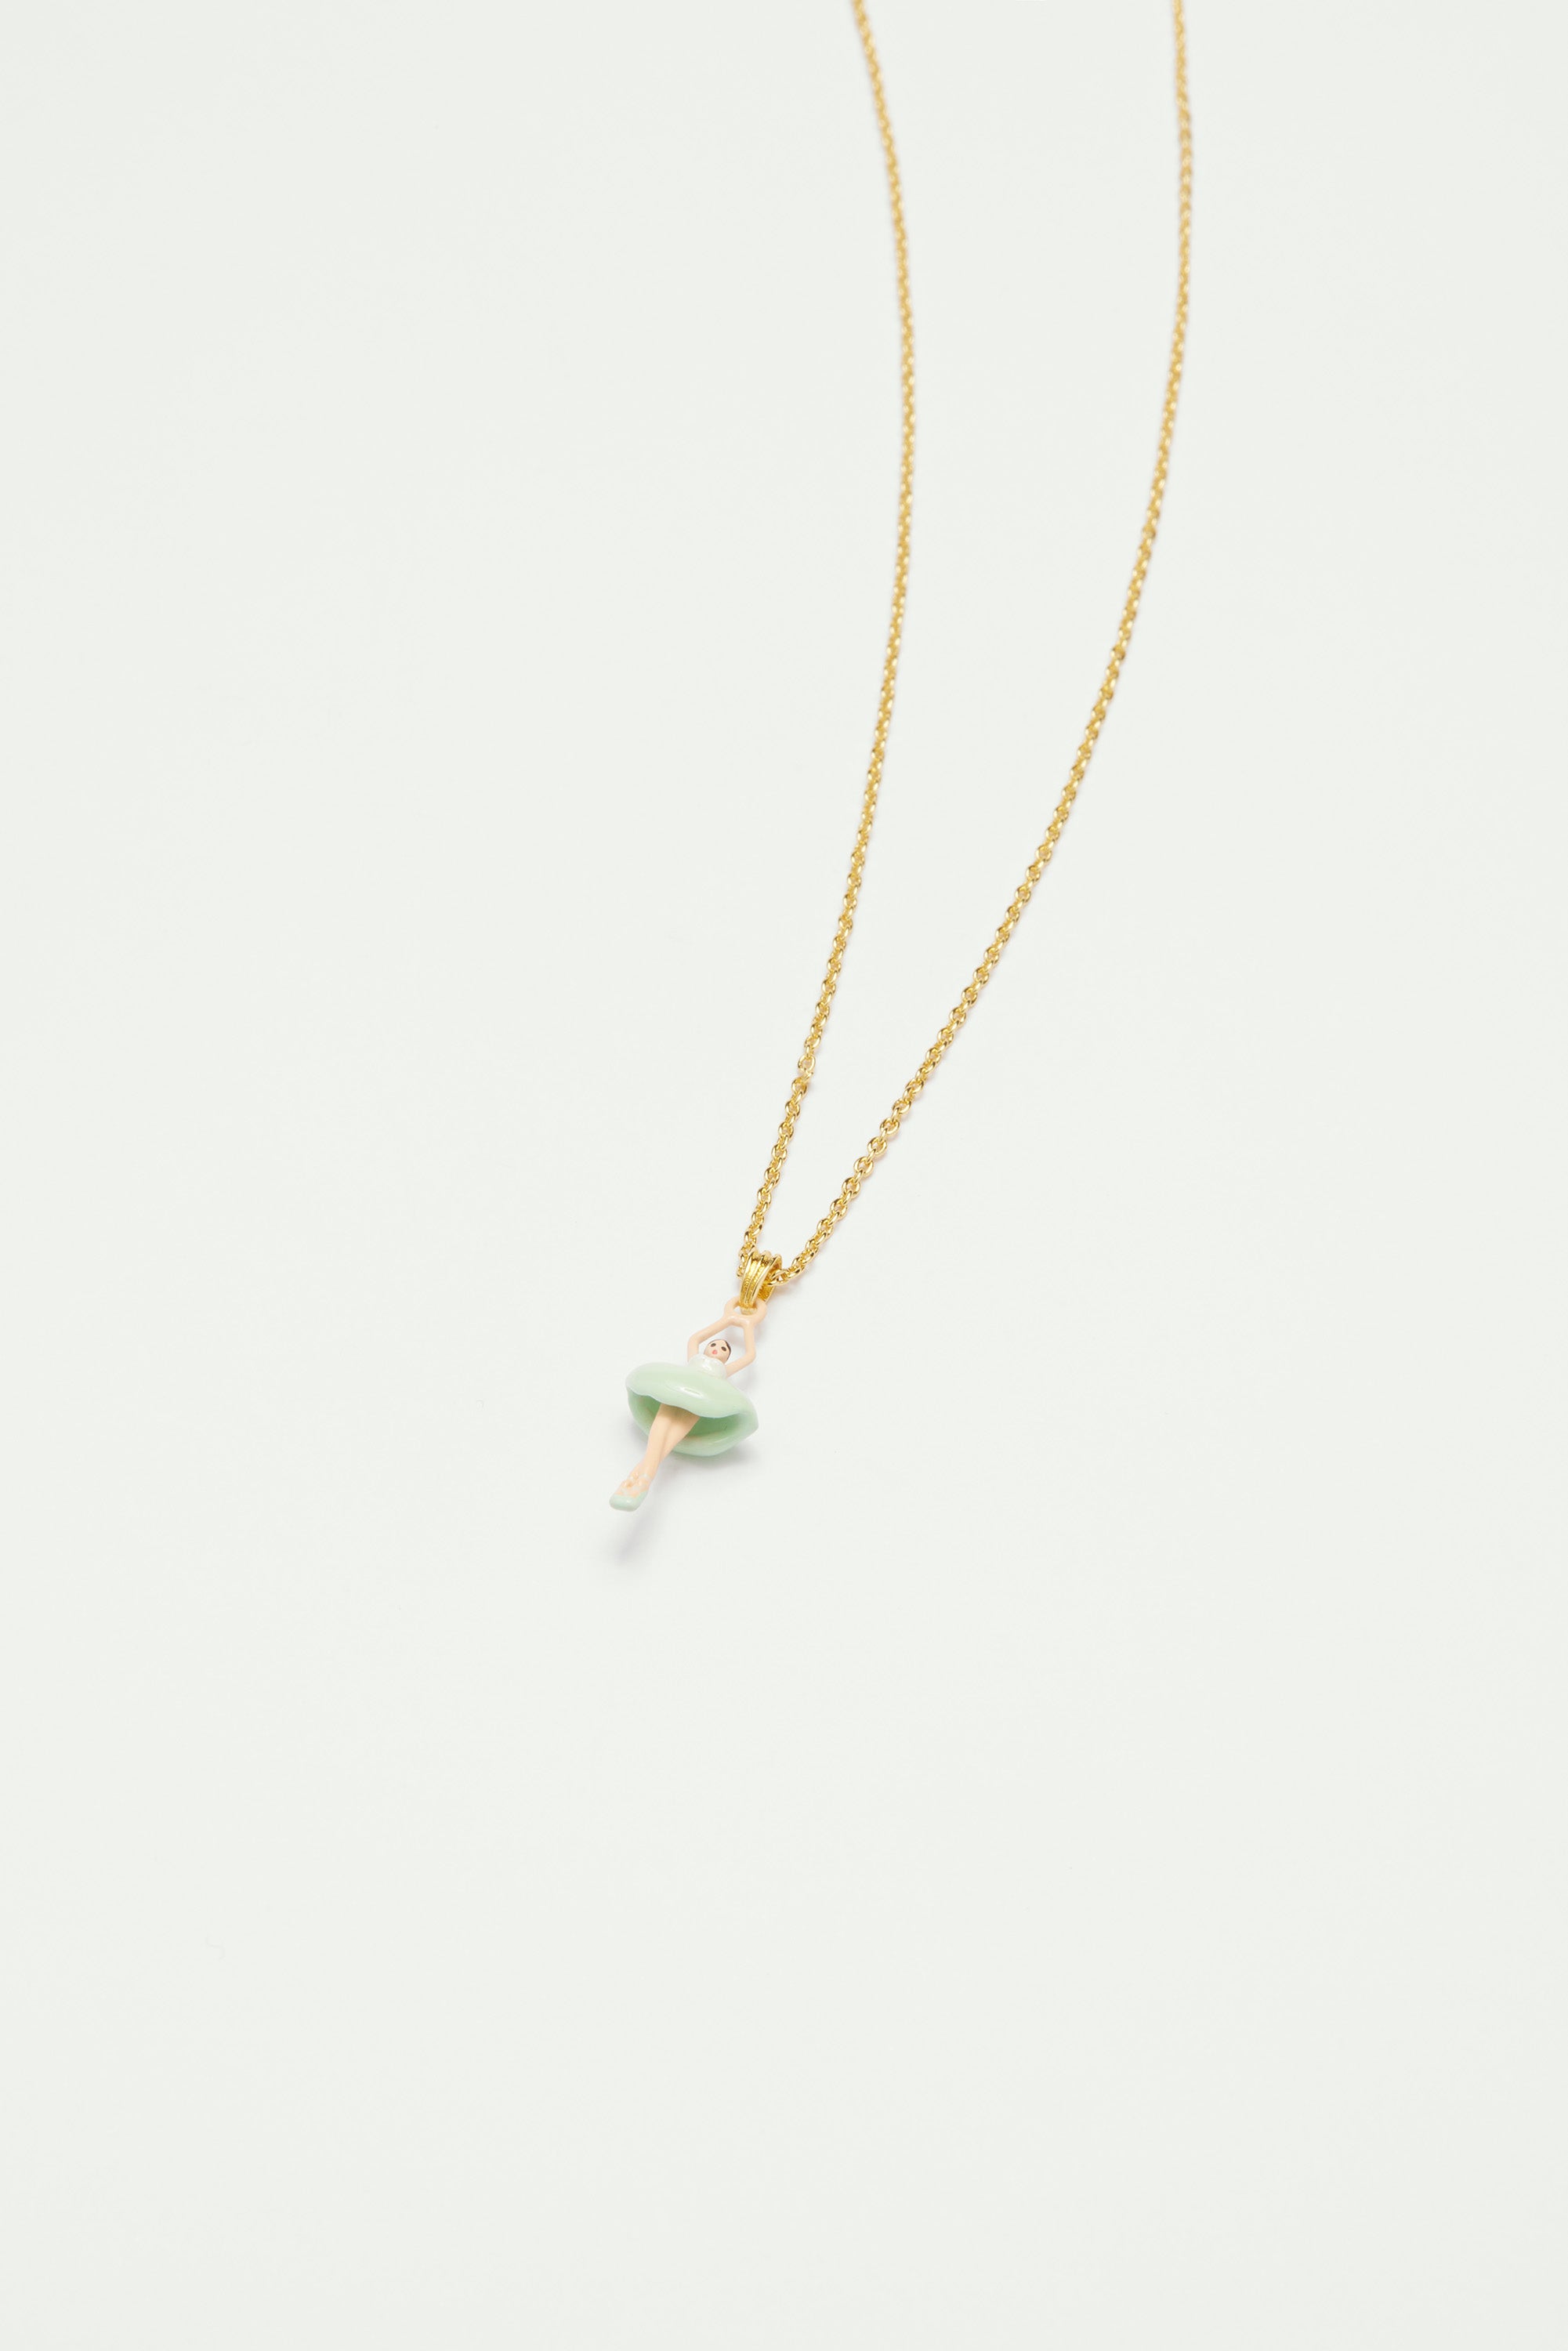 Aqua green ballerina pendant necklace